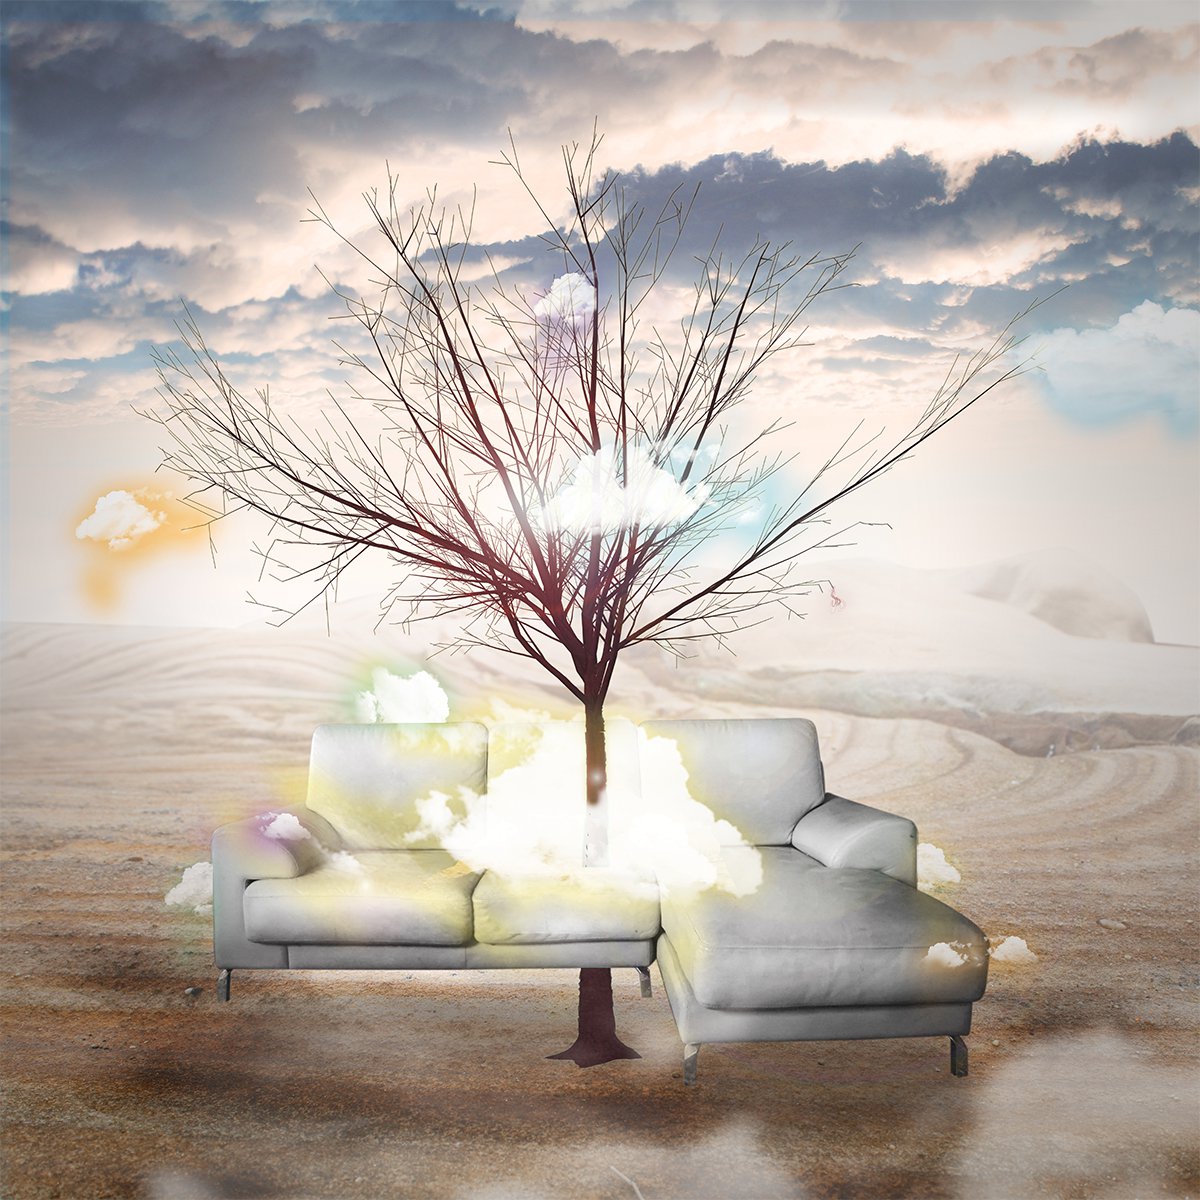 Couch Tree by Vanessa Stefanova